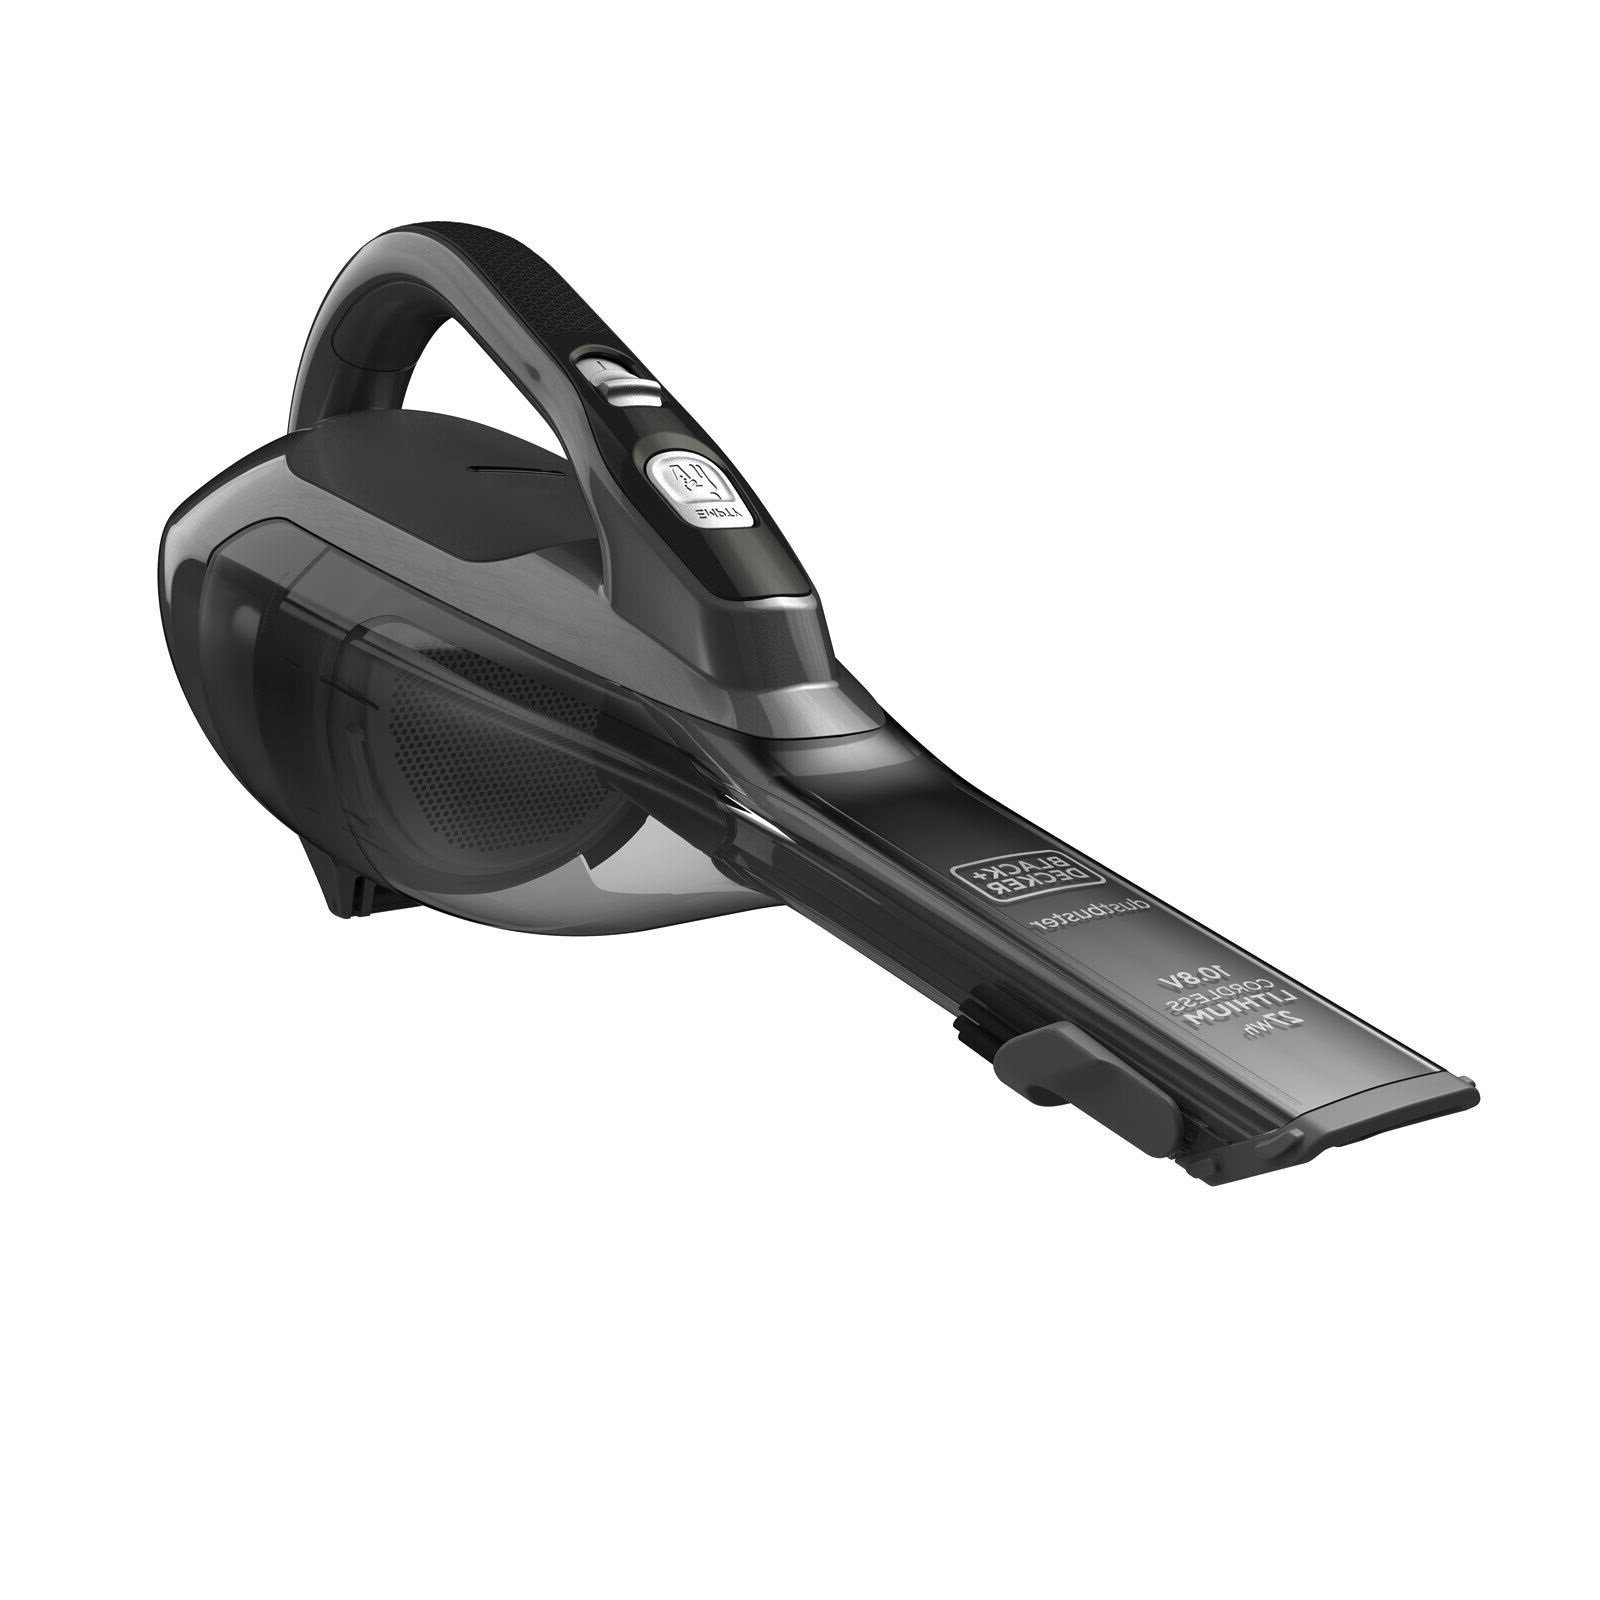 & ergonomisches Handstaubsauger Fugendüse, Design Integrierte DVA325B-QW, Black Decker